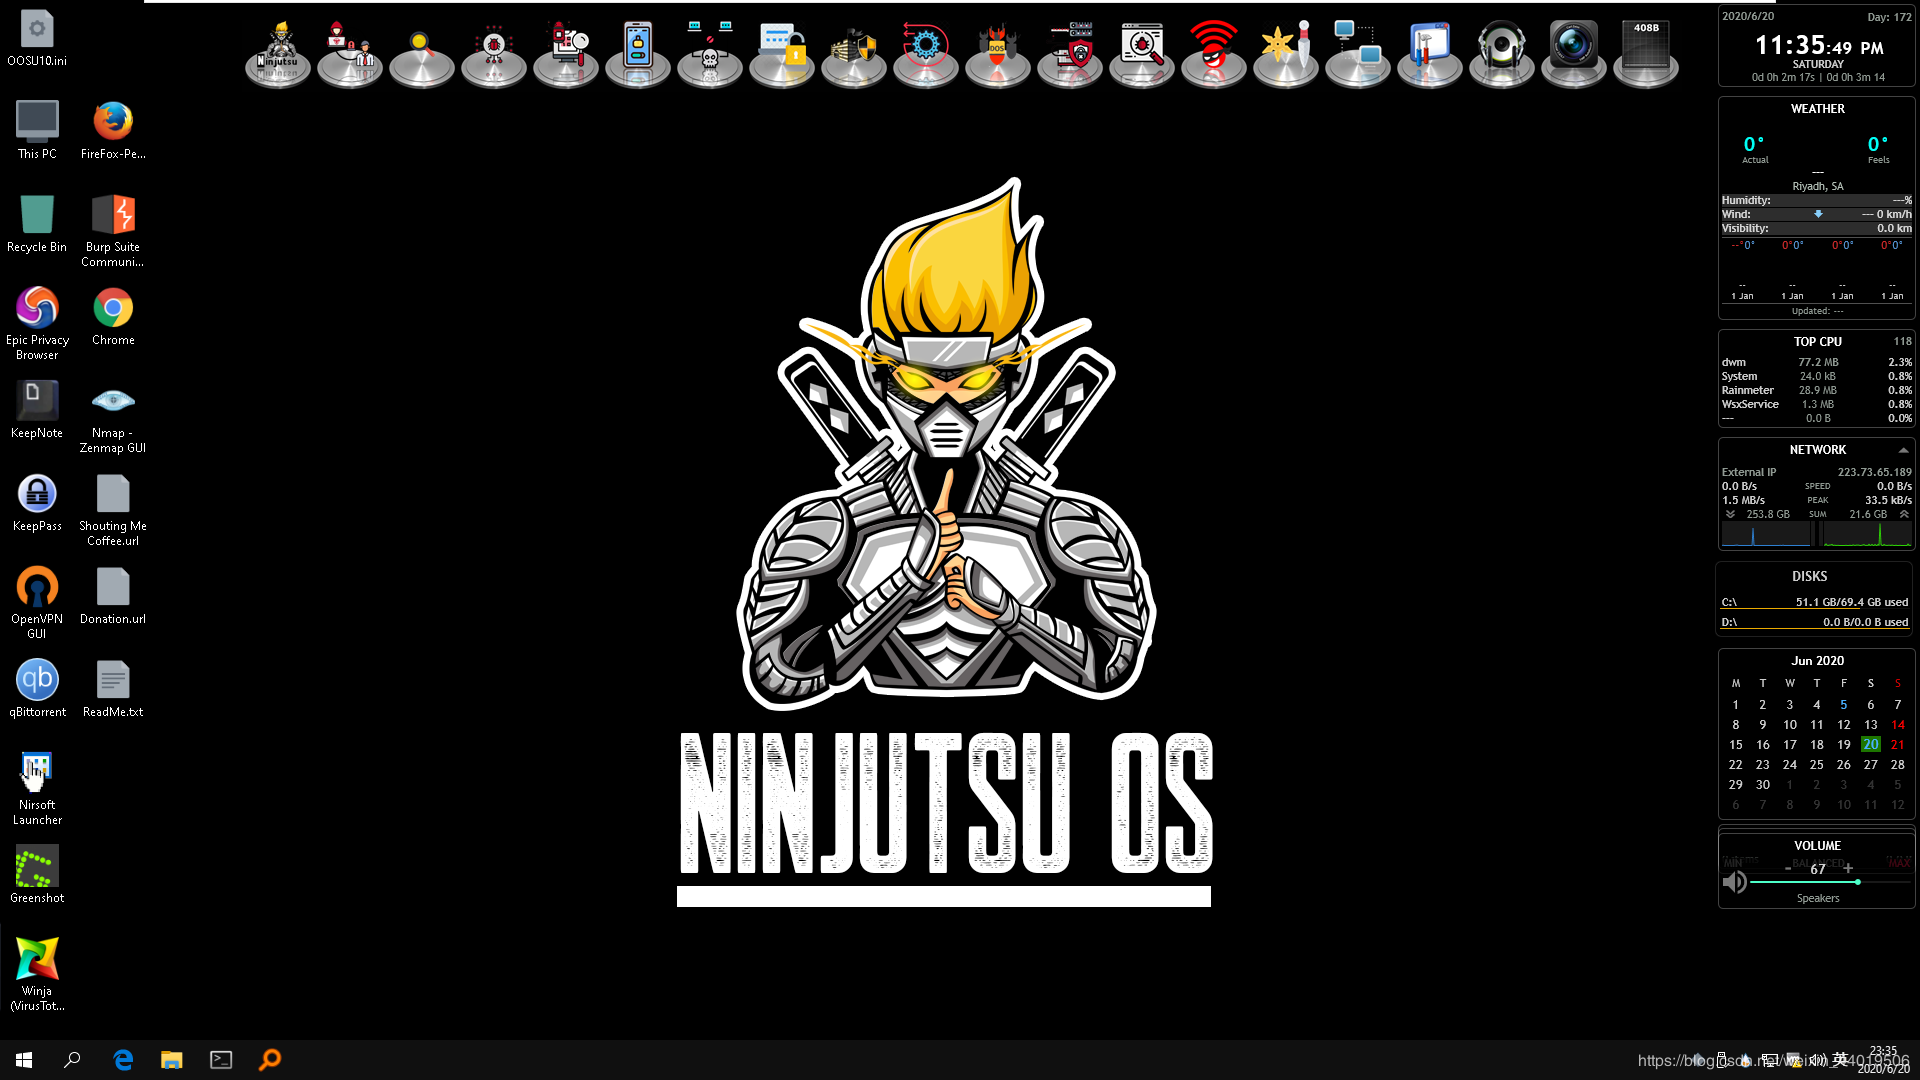 NINJUTSU OS （魔改版Windows10）